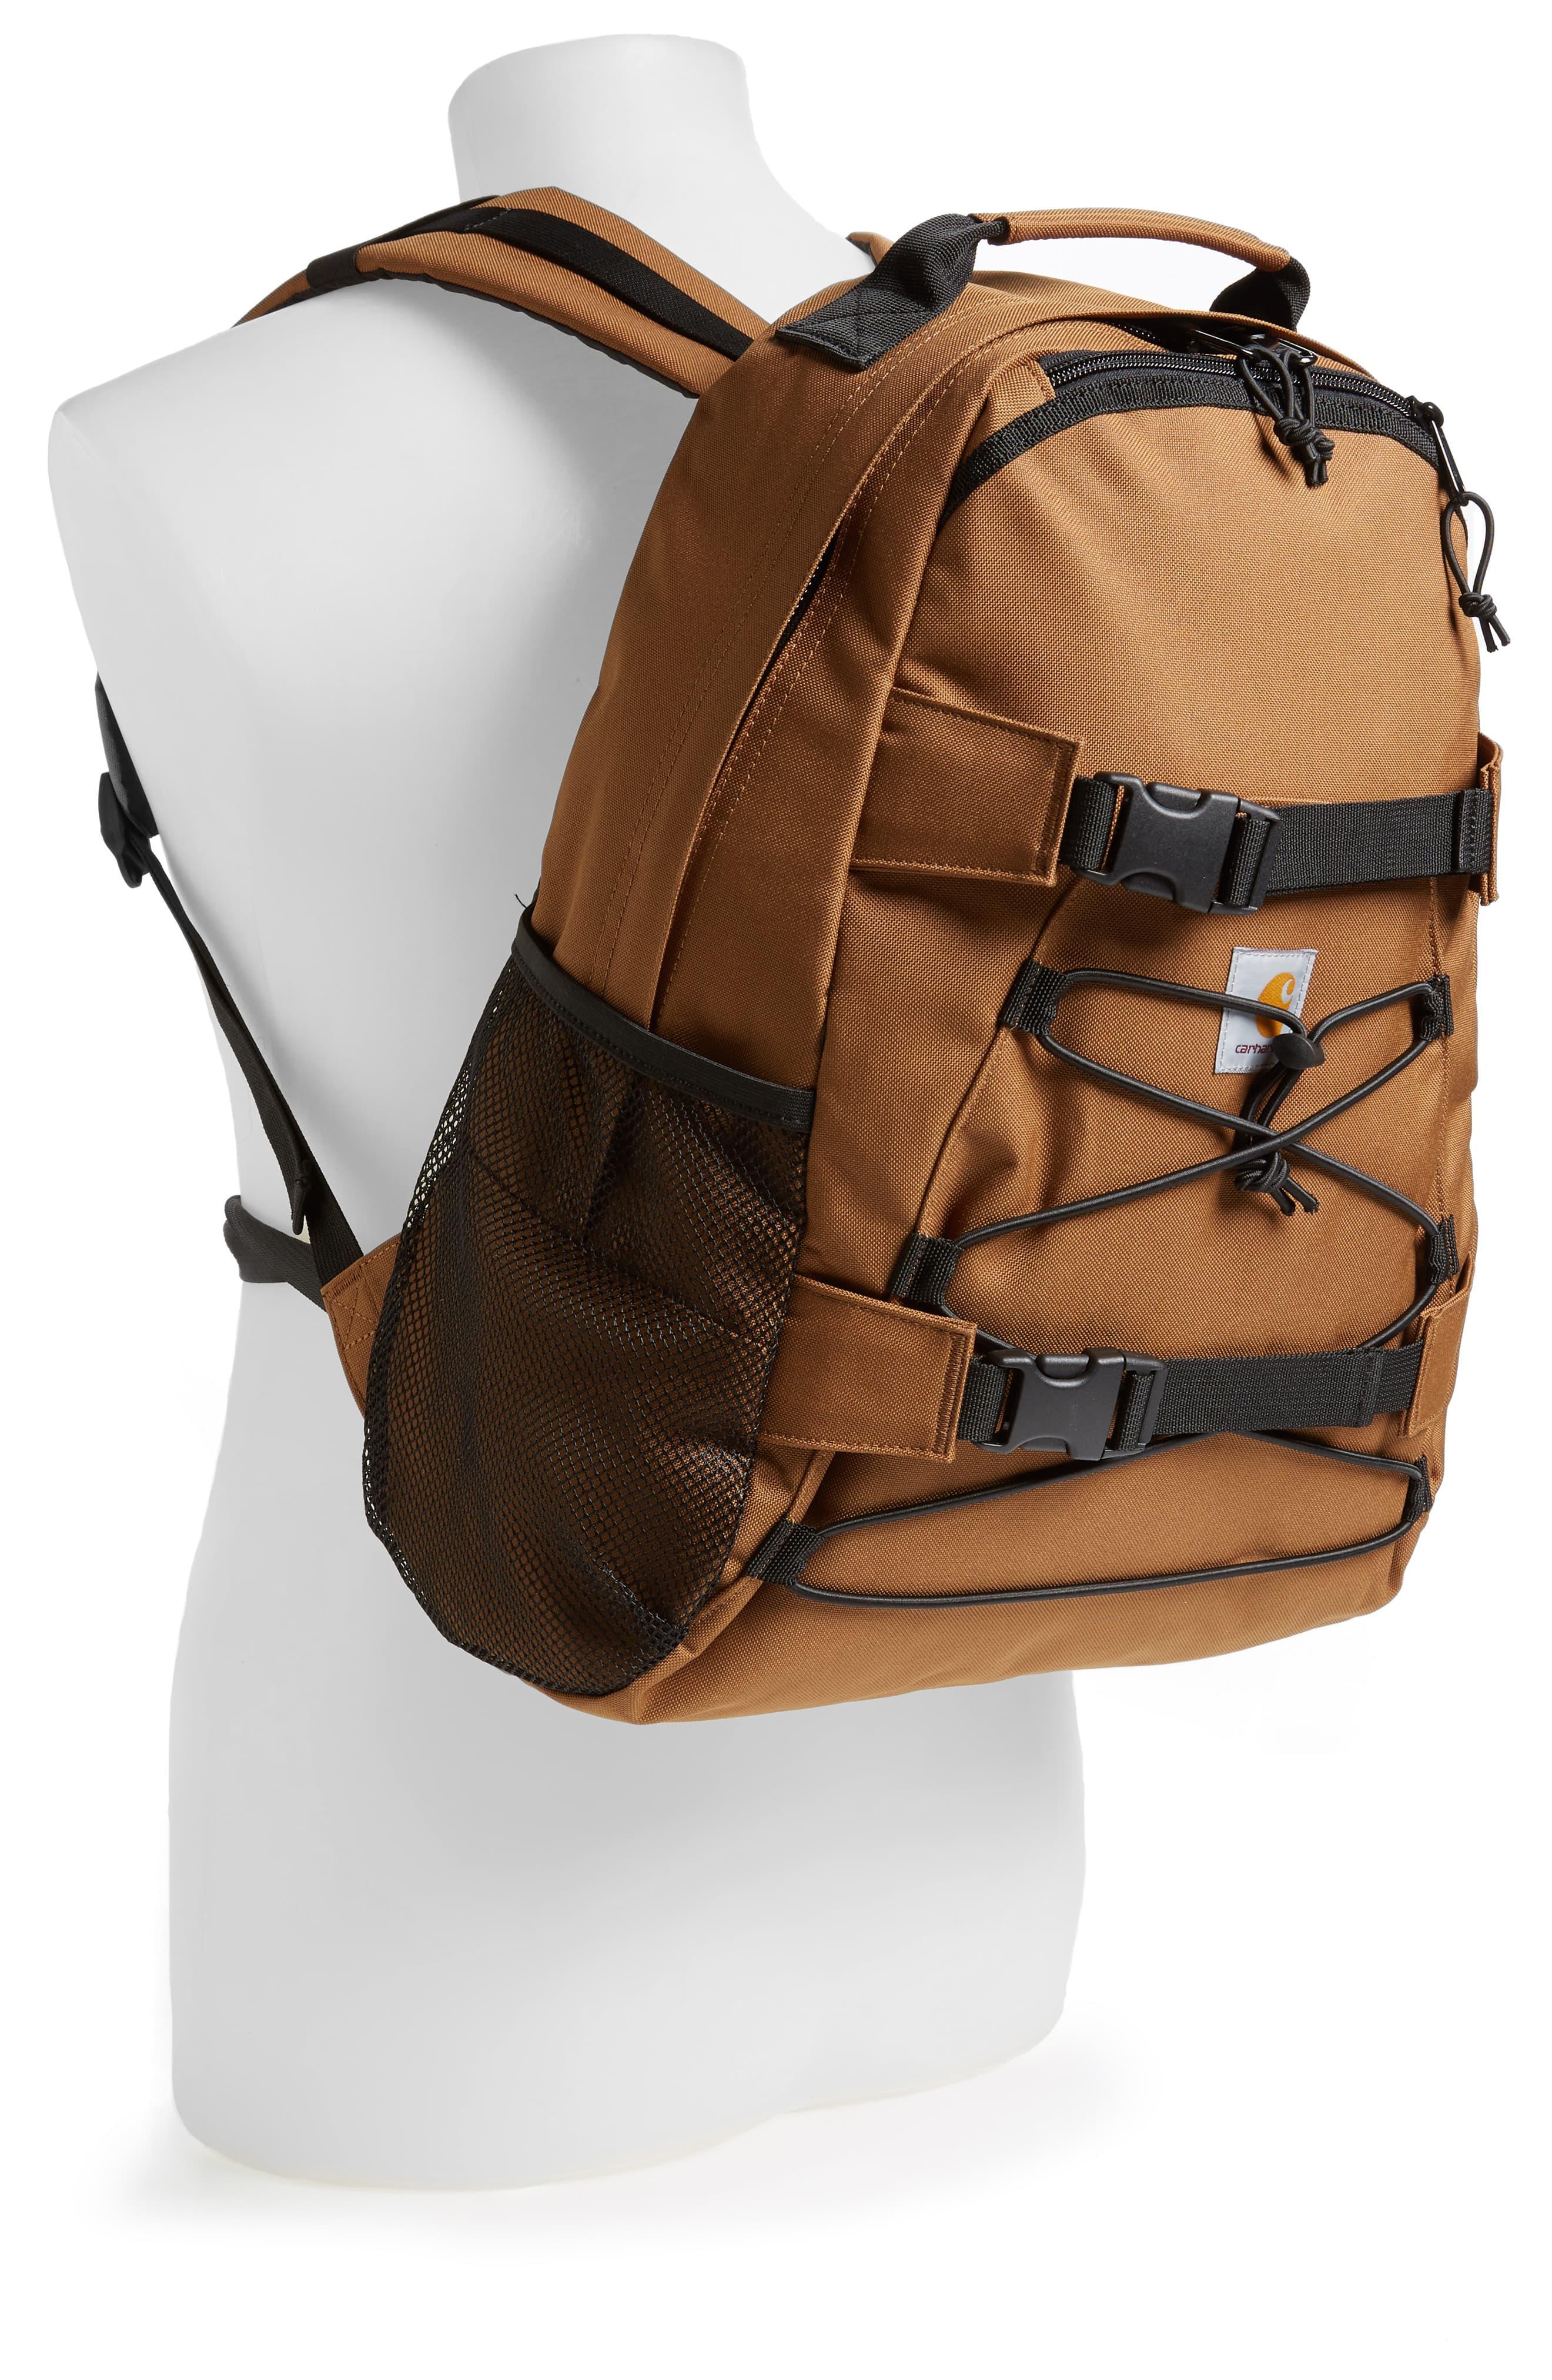 Carhartt WIP Carhartt Kickflip Backpack - in Brown for Men - Lyst